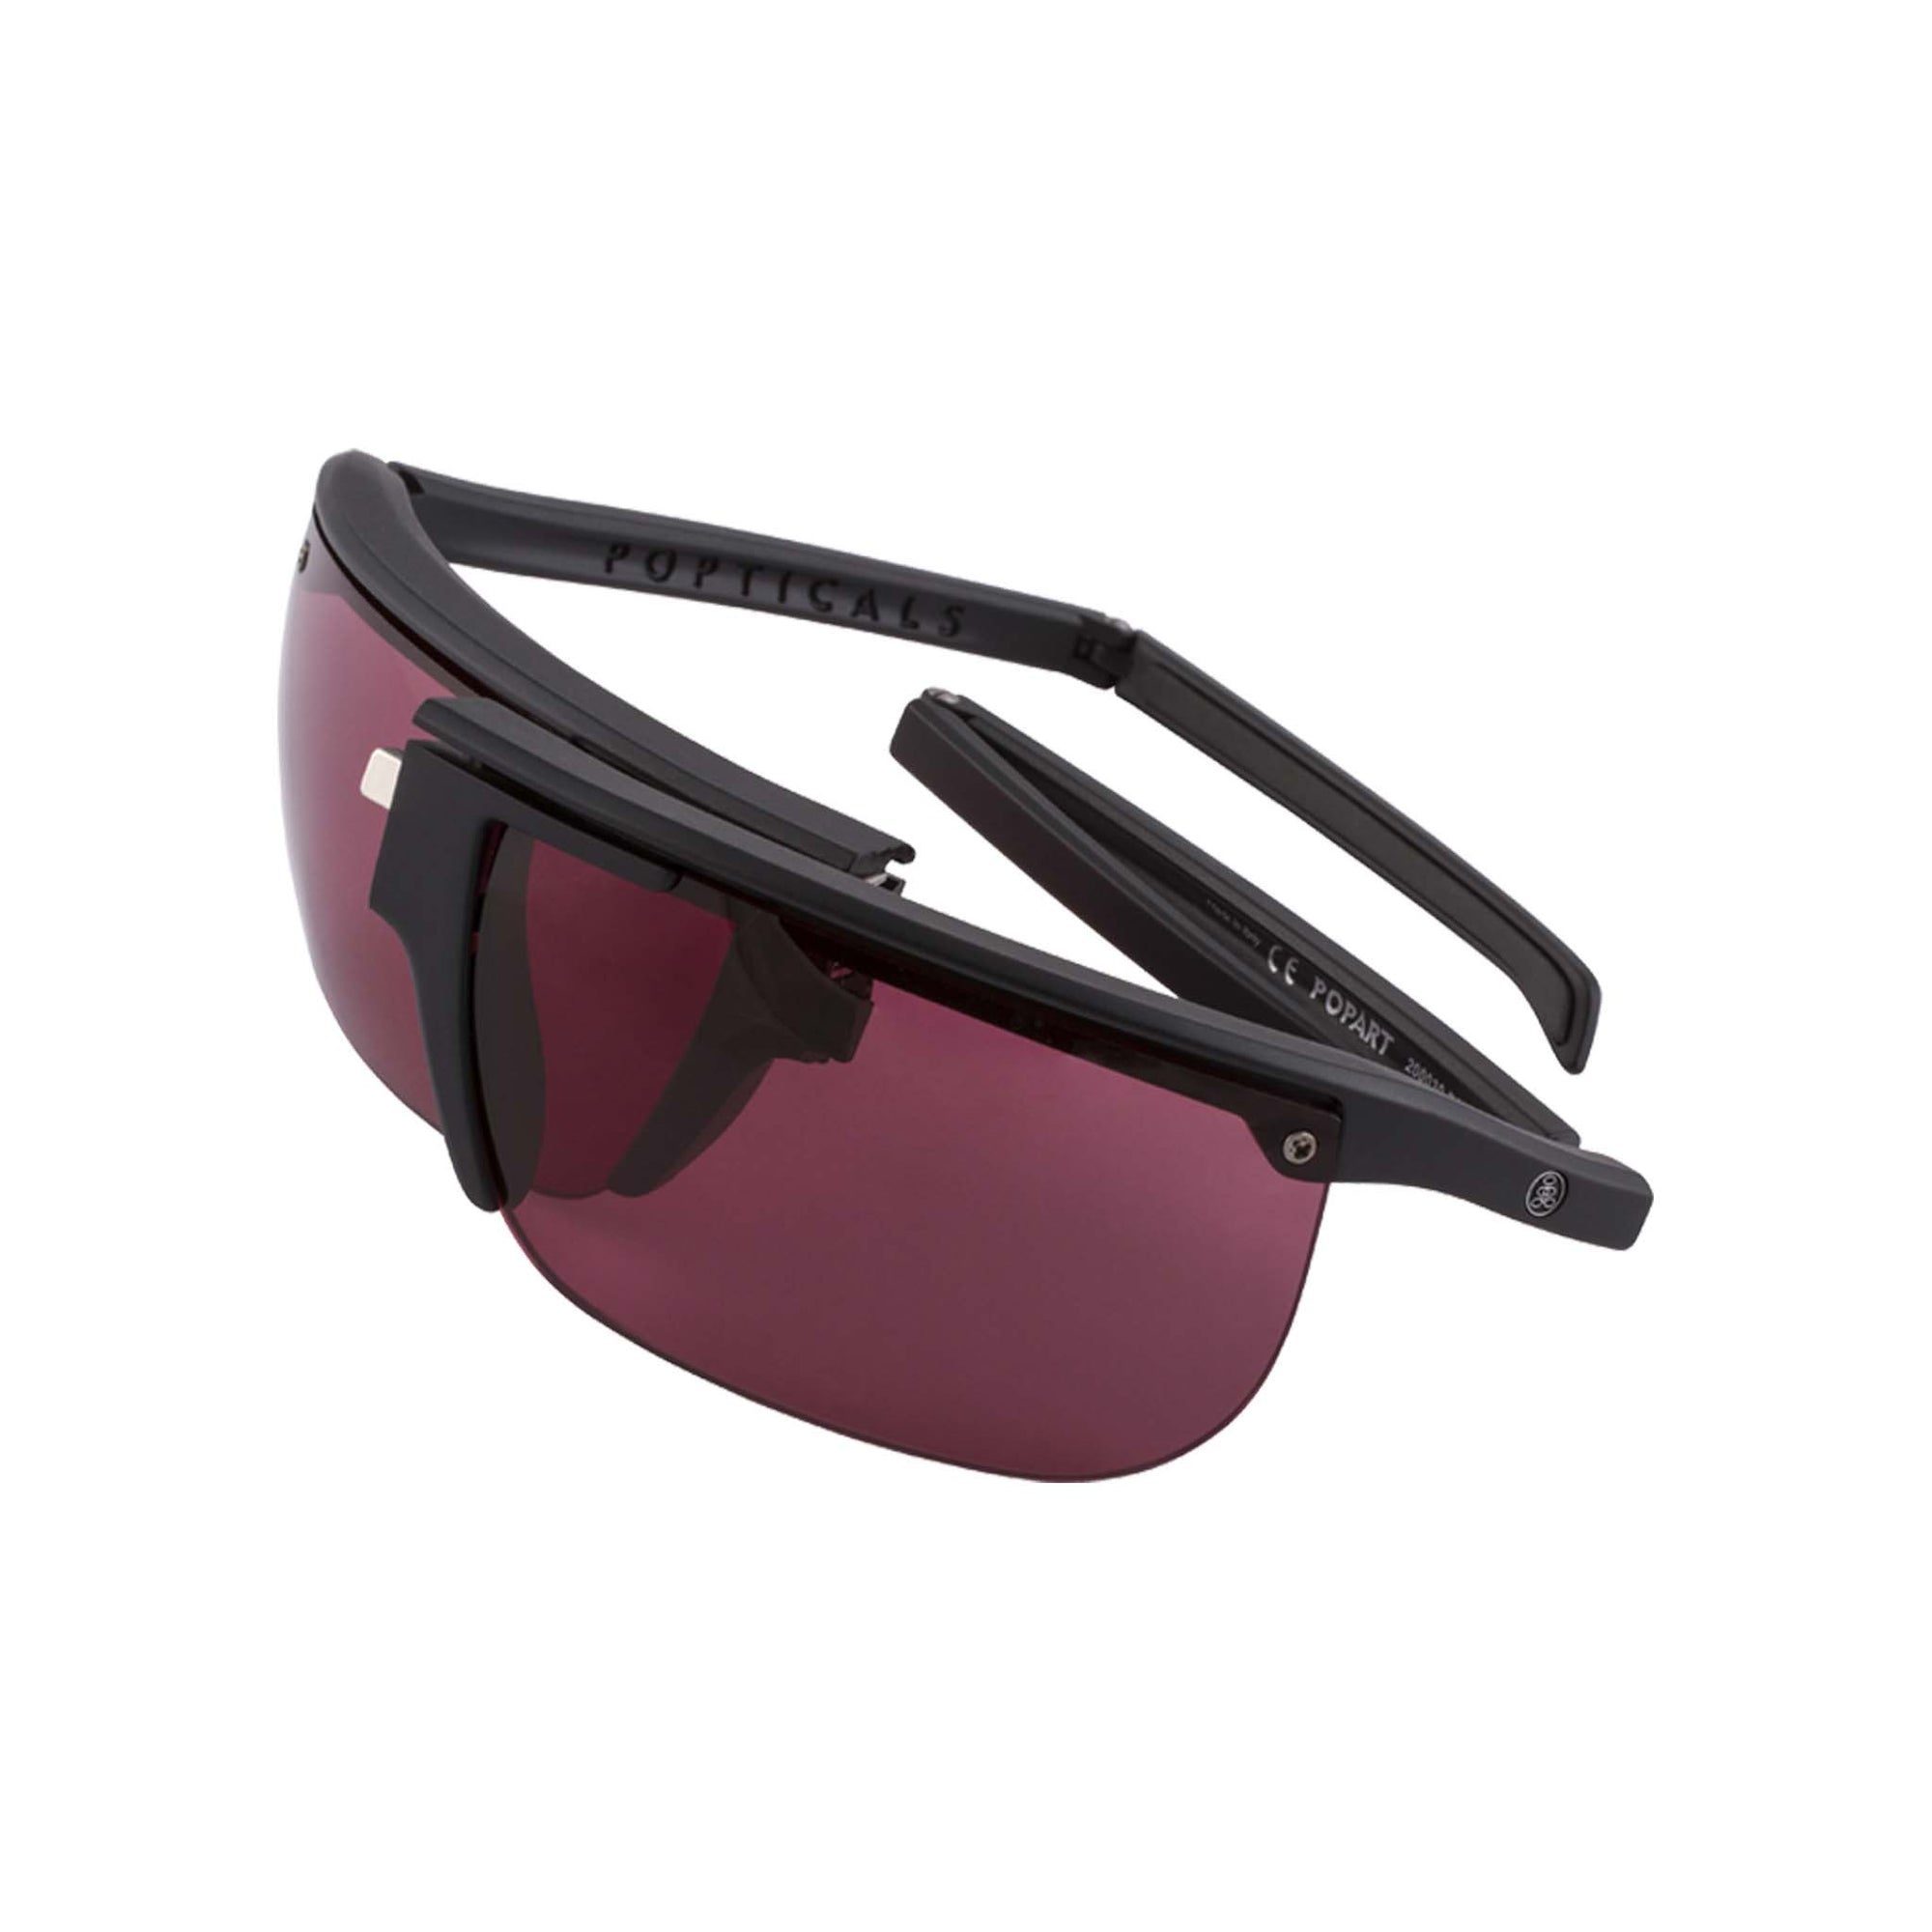 Popticals, Premium Compact Sunglasses, PopArt, 200030-BMPS, Standard Golf Sunglasses, Matte Black Frame, Purple Golf Lenses, Glam View